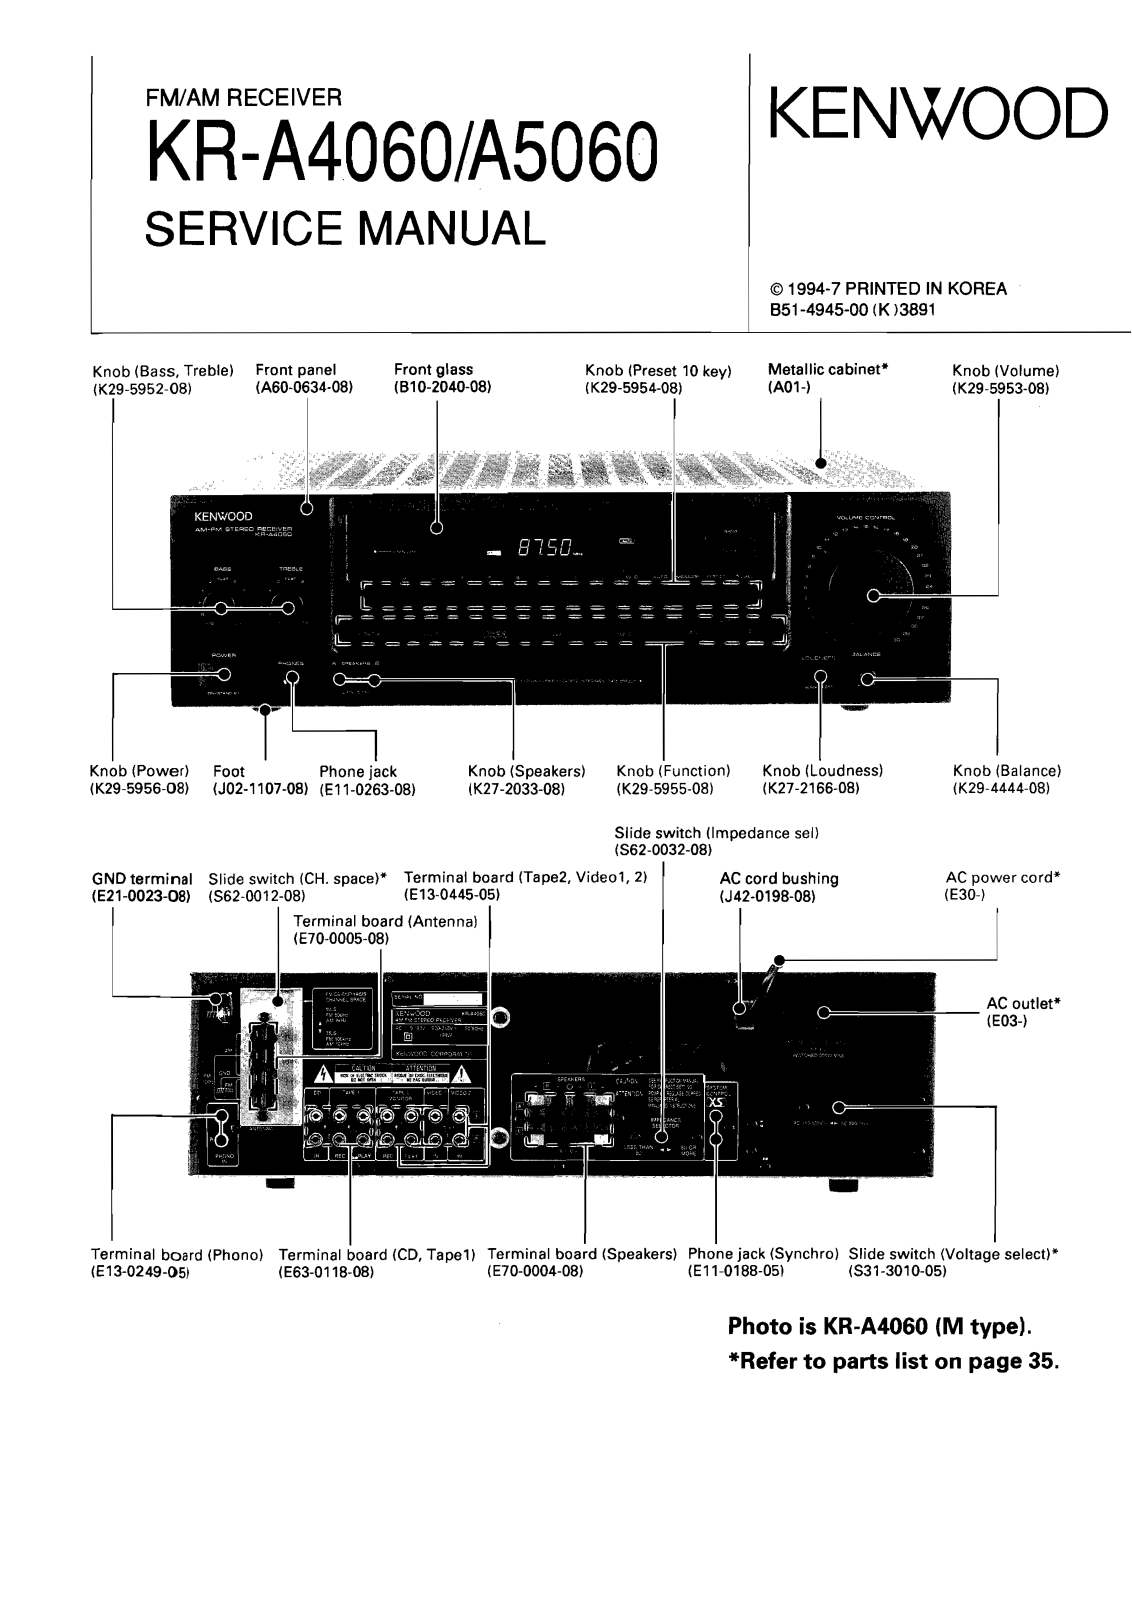 Kenwood KR-A5060, KR-A4060 Service Manual